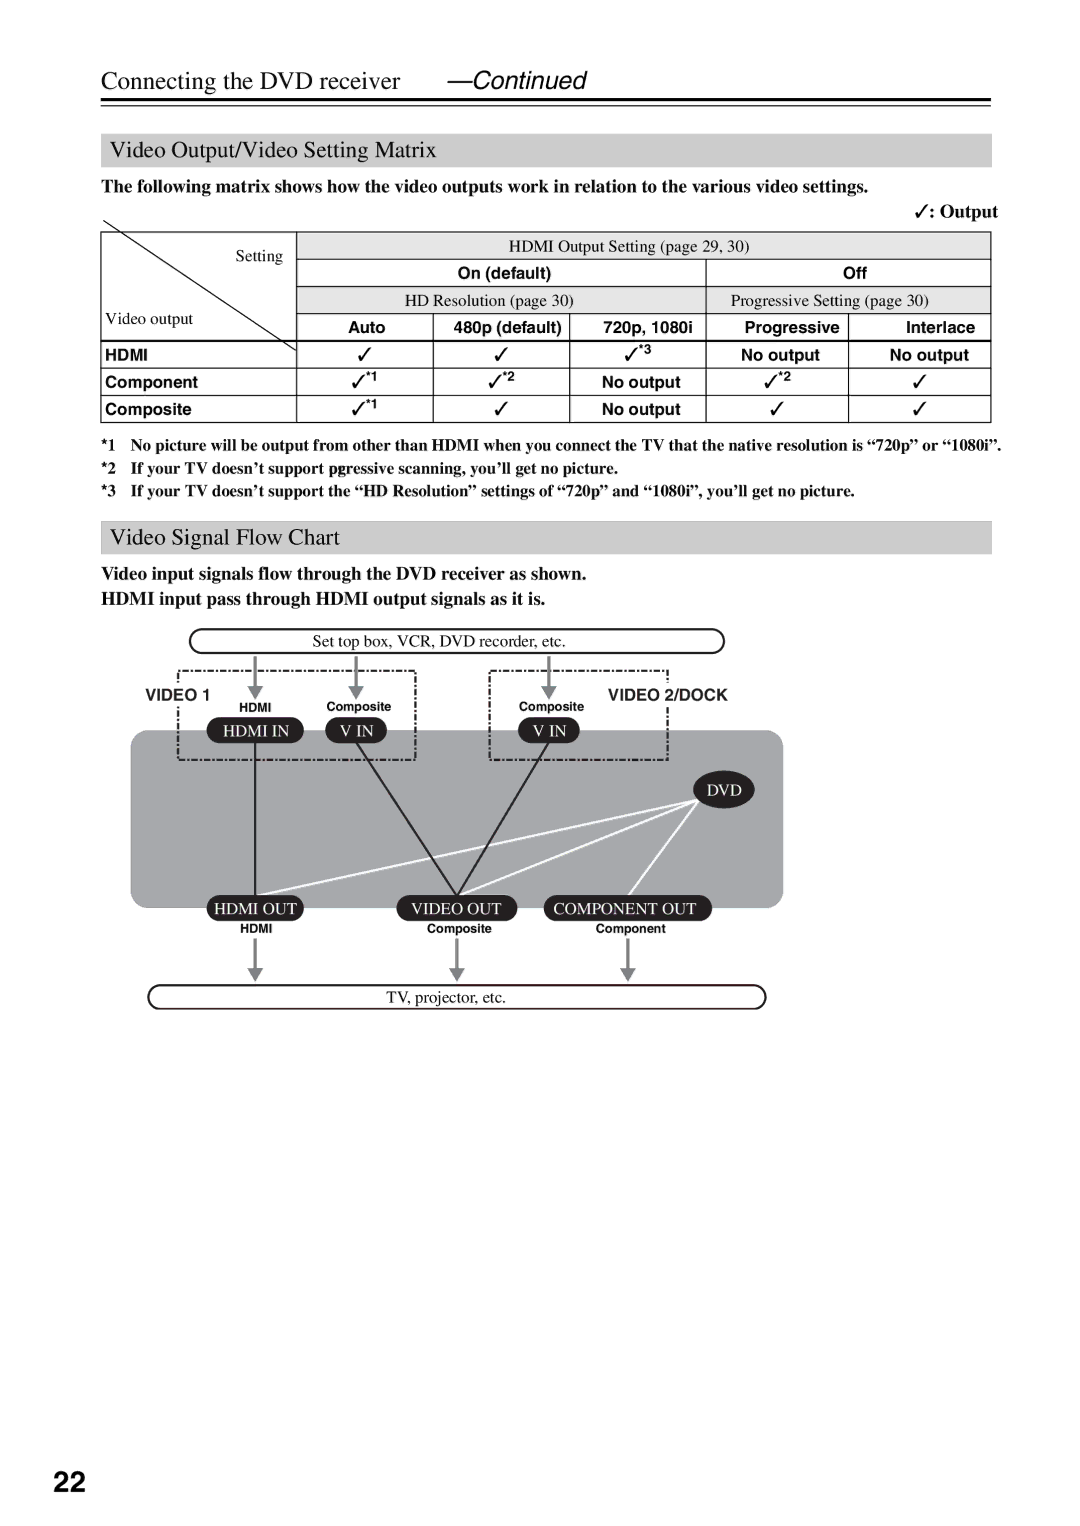 Integra DSR-4.8 instruction manual Video Output/Video Setting Matrix, Video Signal Flow Chart 